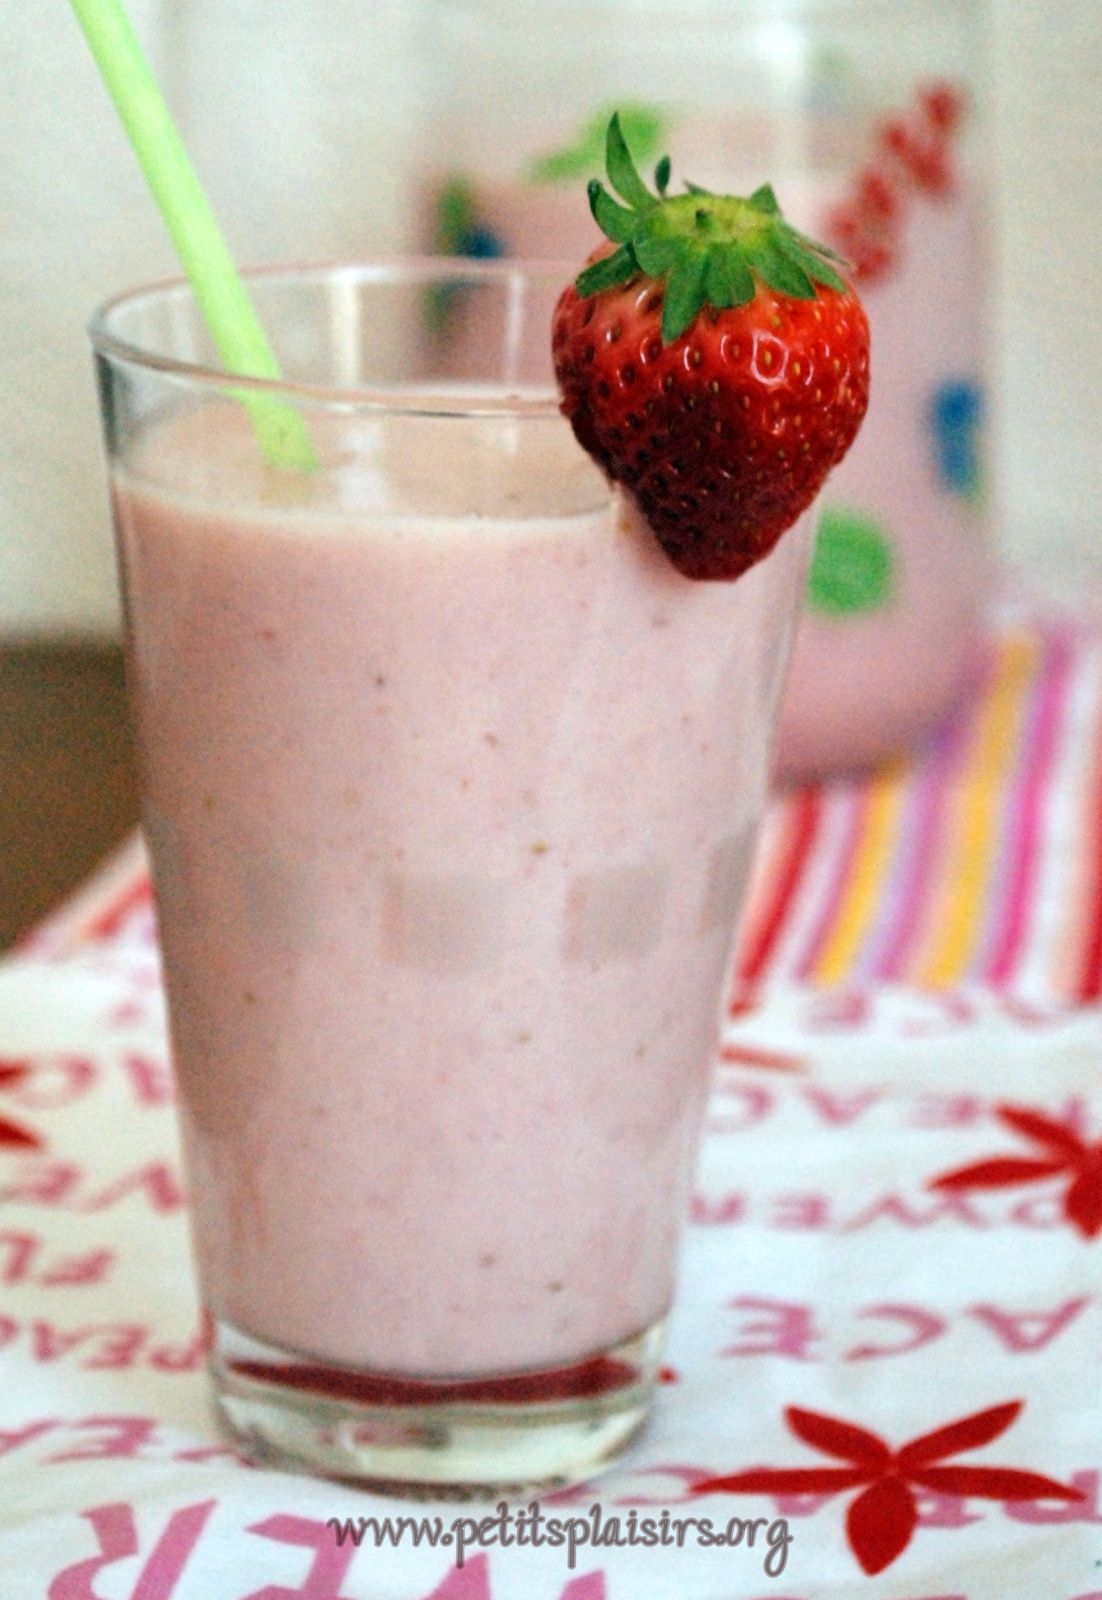 Milk shake fraise banane - http://www.petitsplaisirs.org/